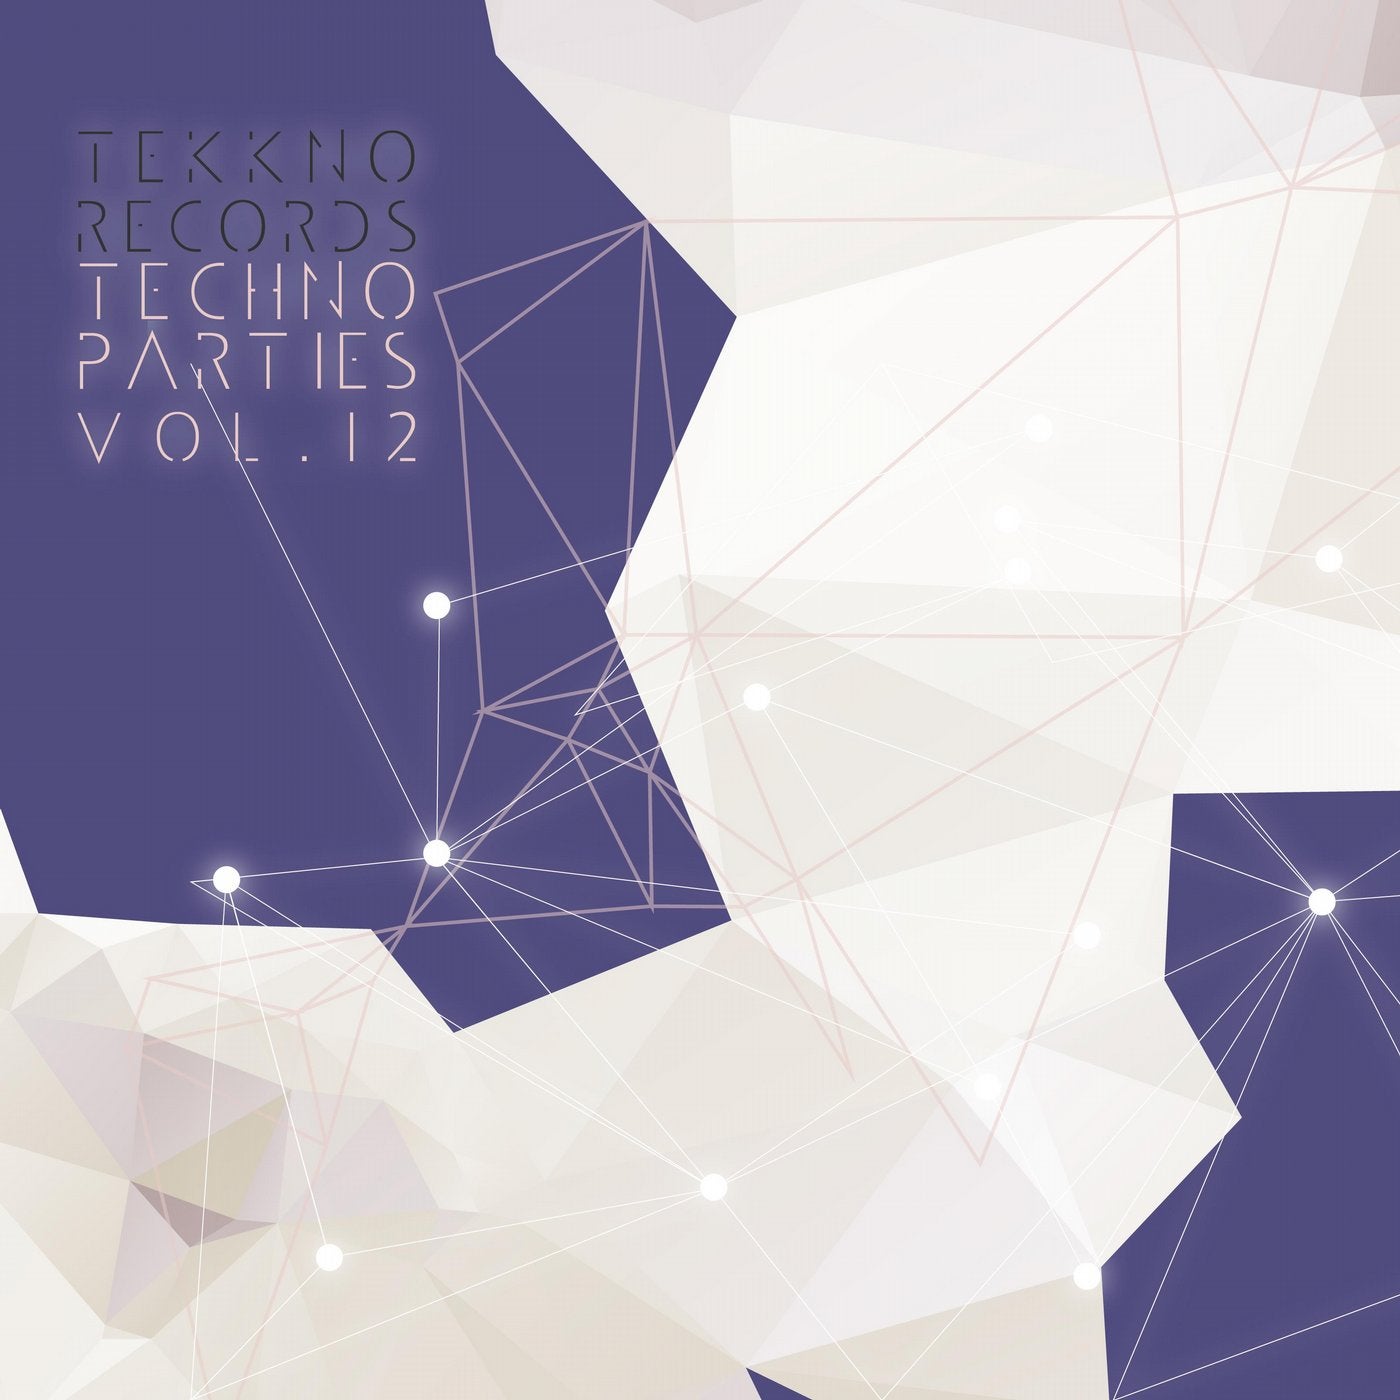 Techno Parties Vol.12